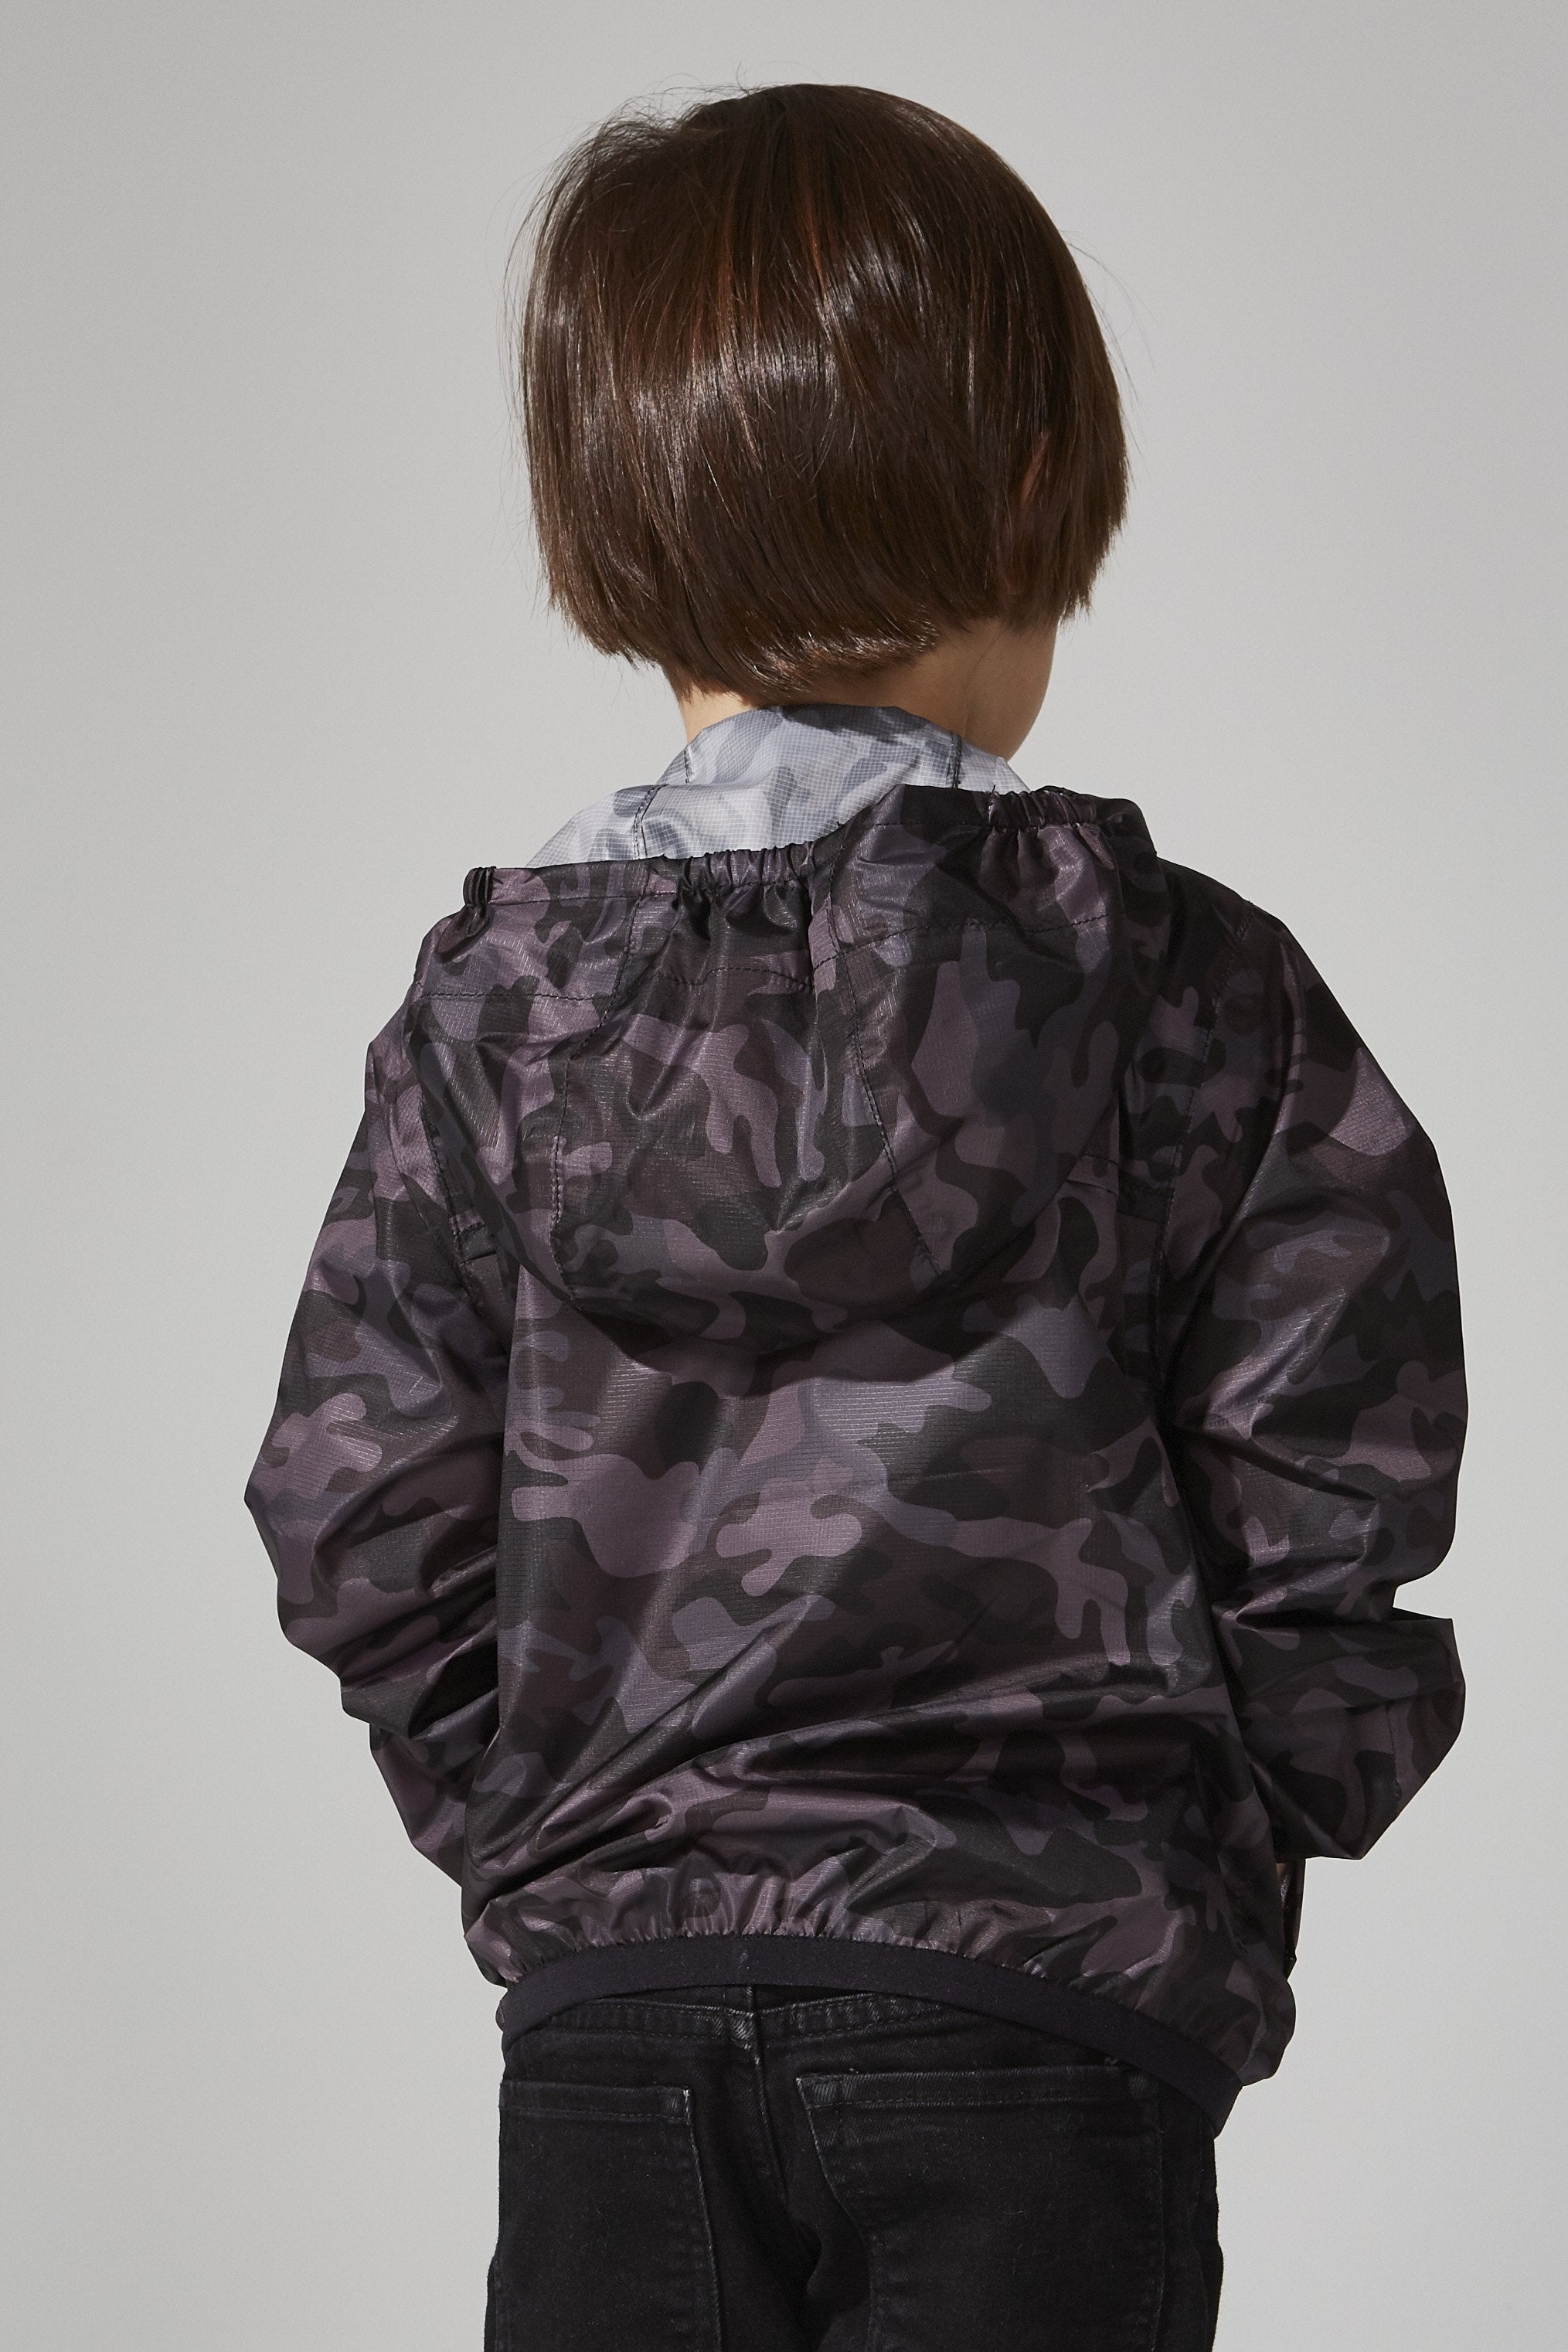 Sam Print - Kids Black Camo Full Zip Packable Rain Jacket - O8lifestyle.